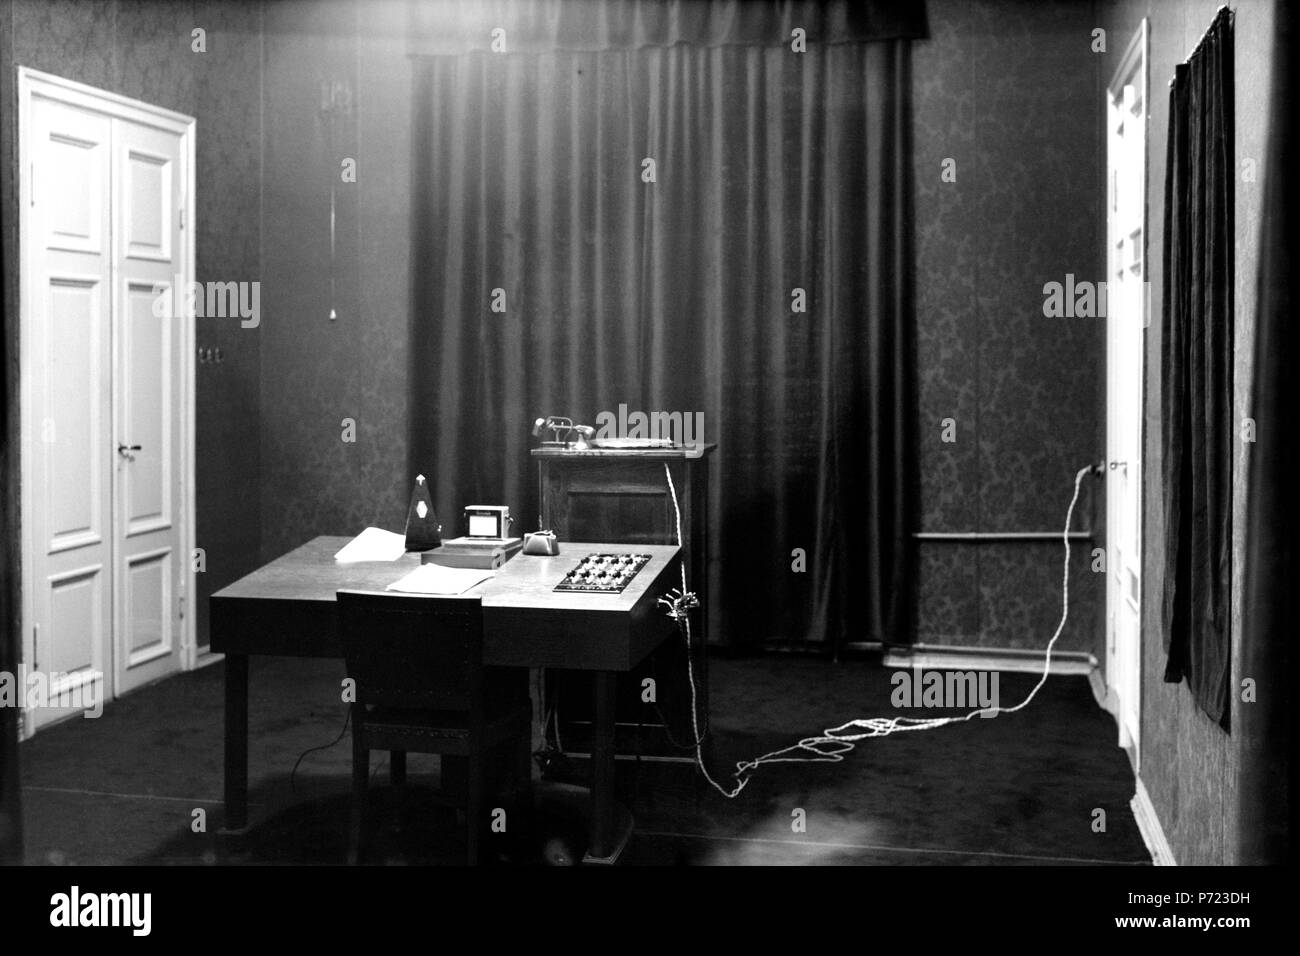 The Finnish Broadcasting Company 1927-1934, radio announcing studio at the Aleksanterinkatu 46 premises. Stock Photo